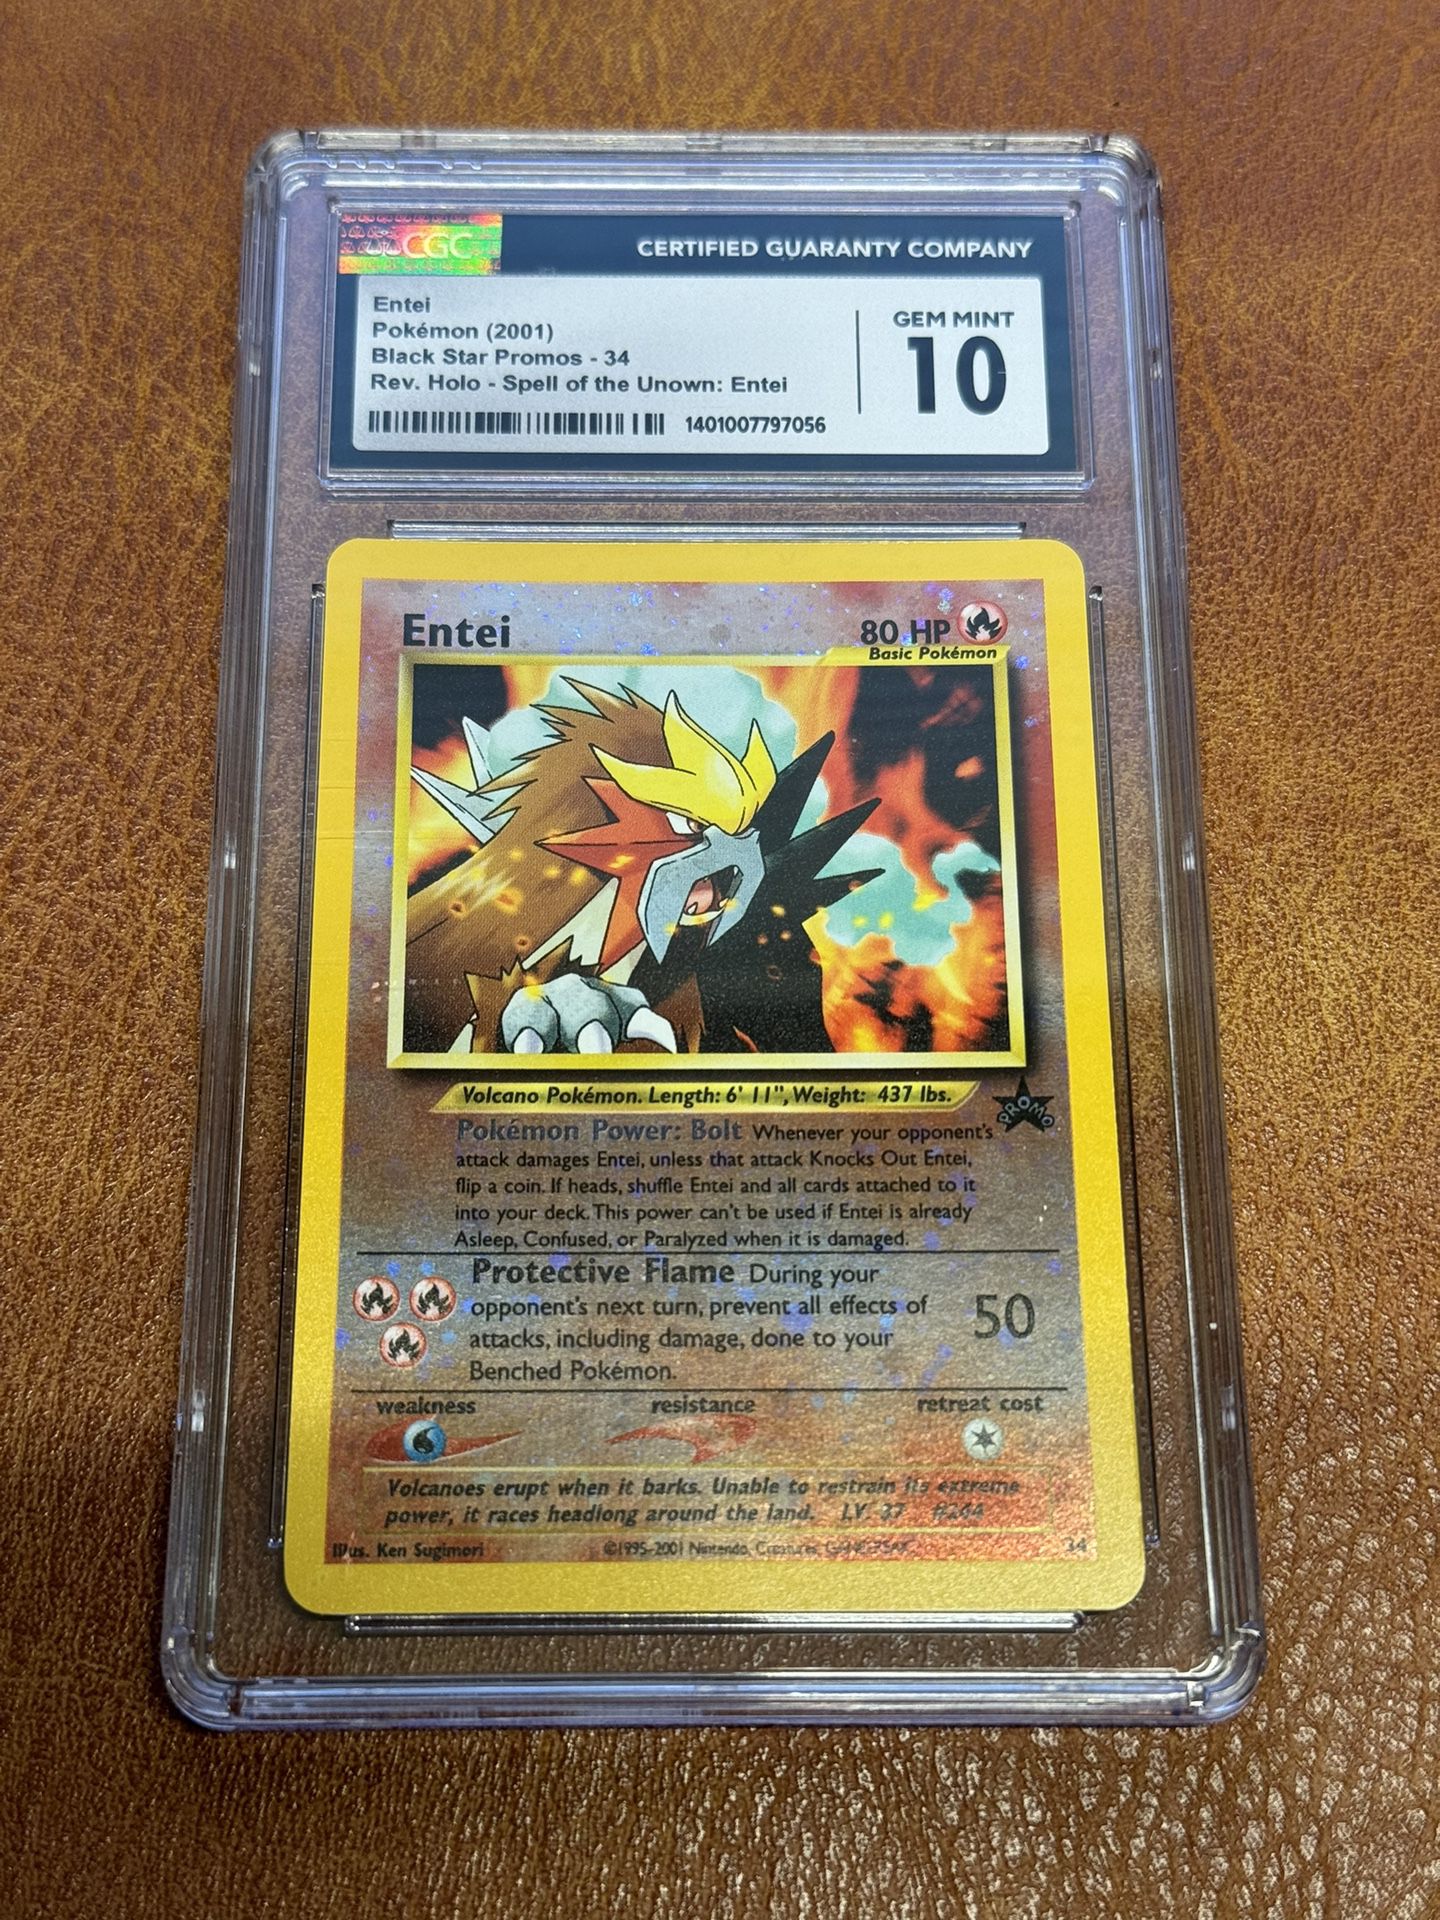 Pokémon 2001 Entai Gem Mint 10